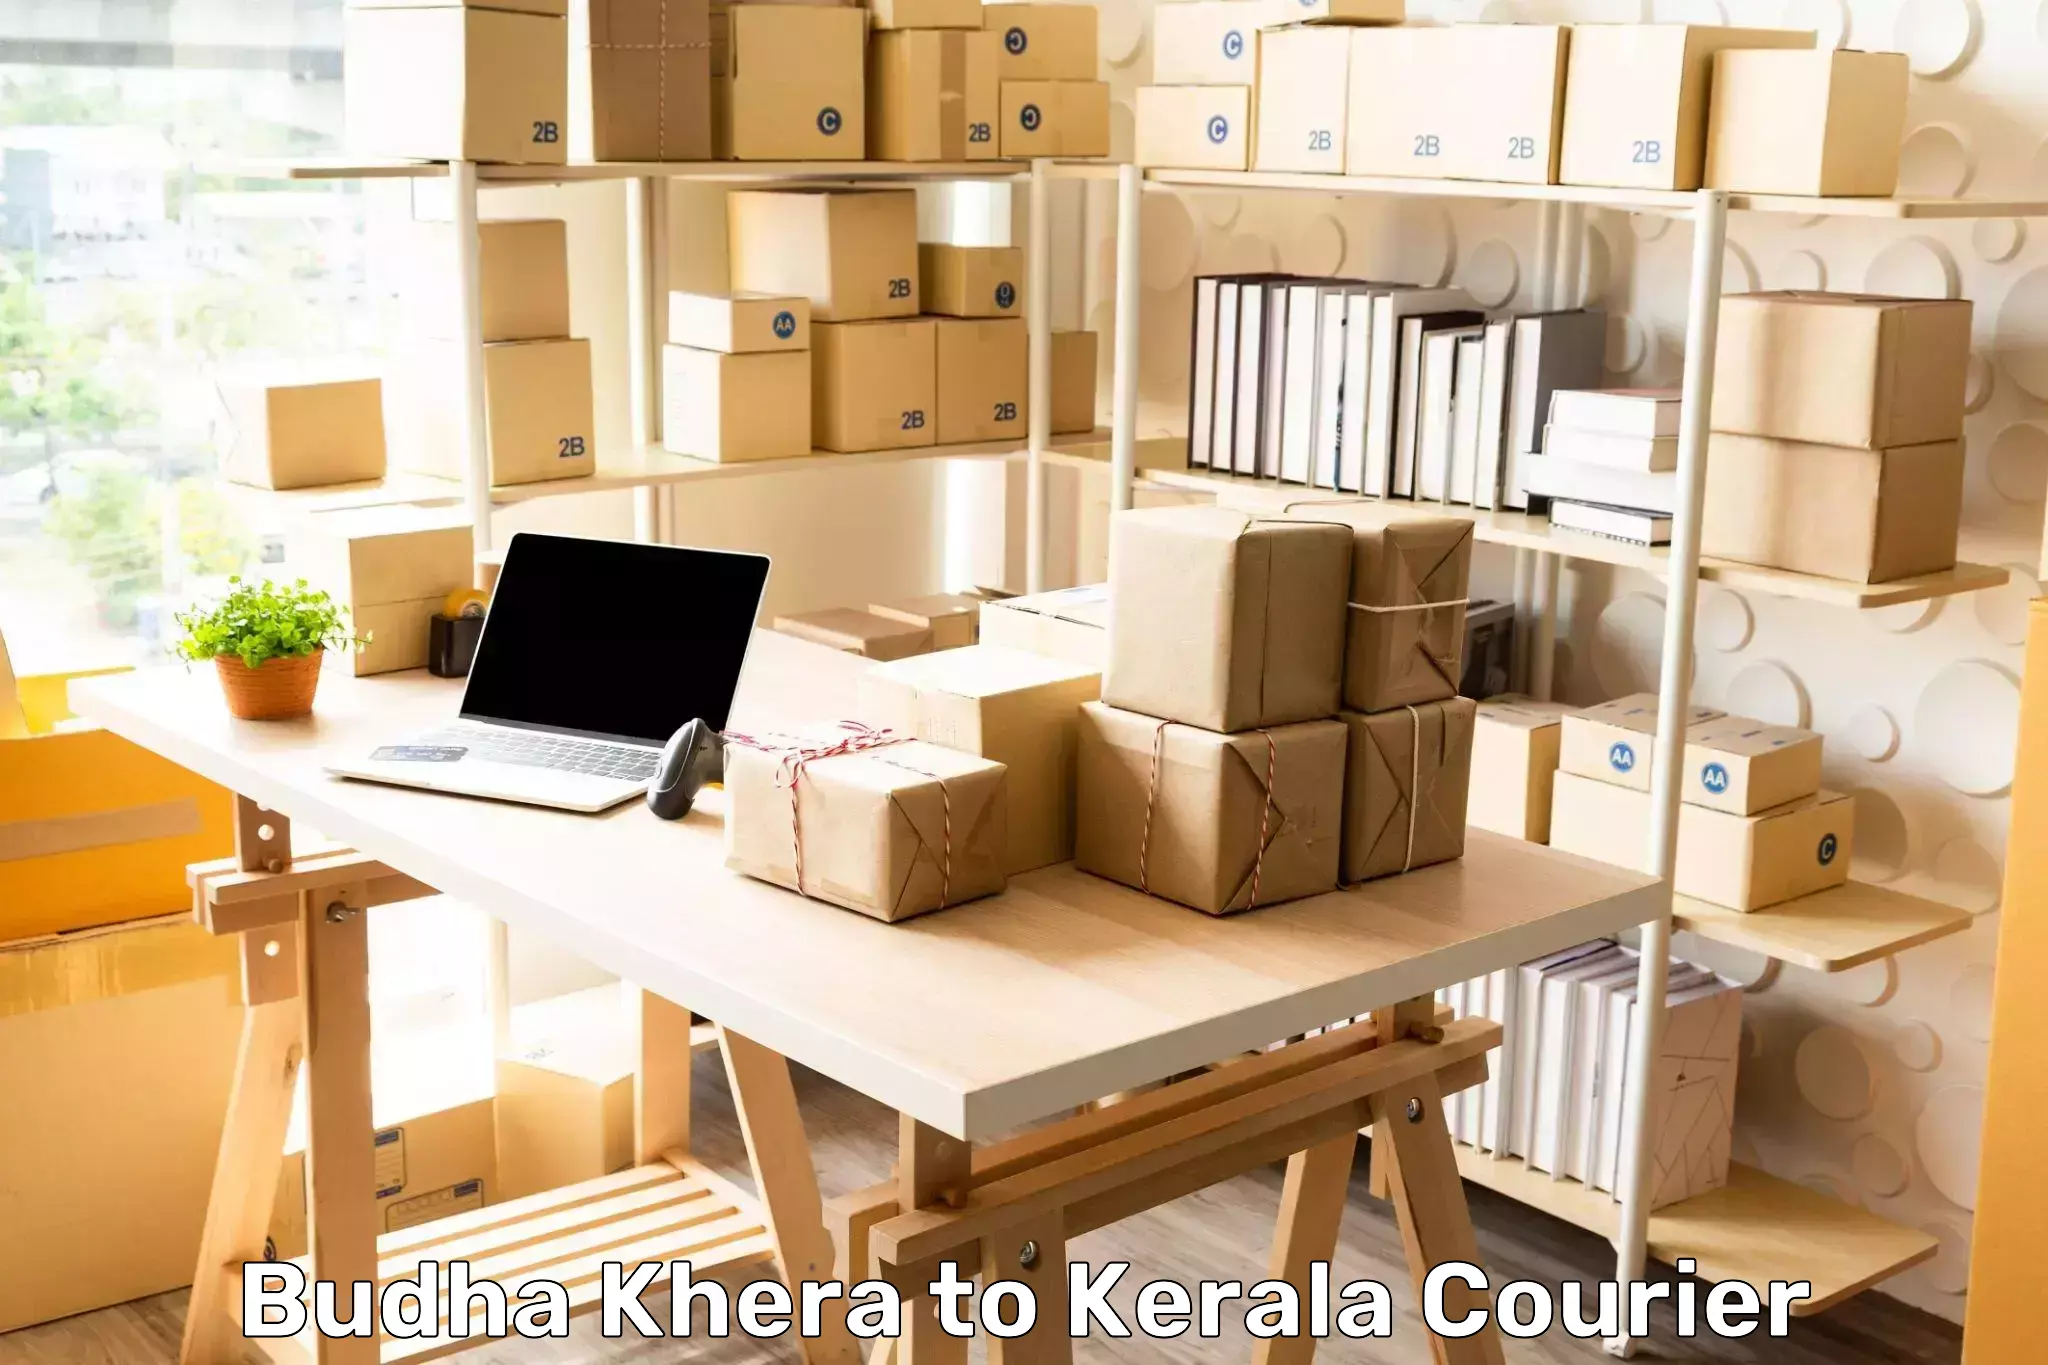 Courier service booking Budha Khera to Kerala